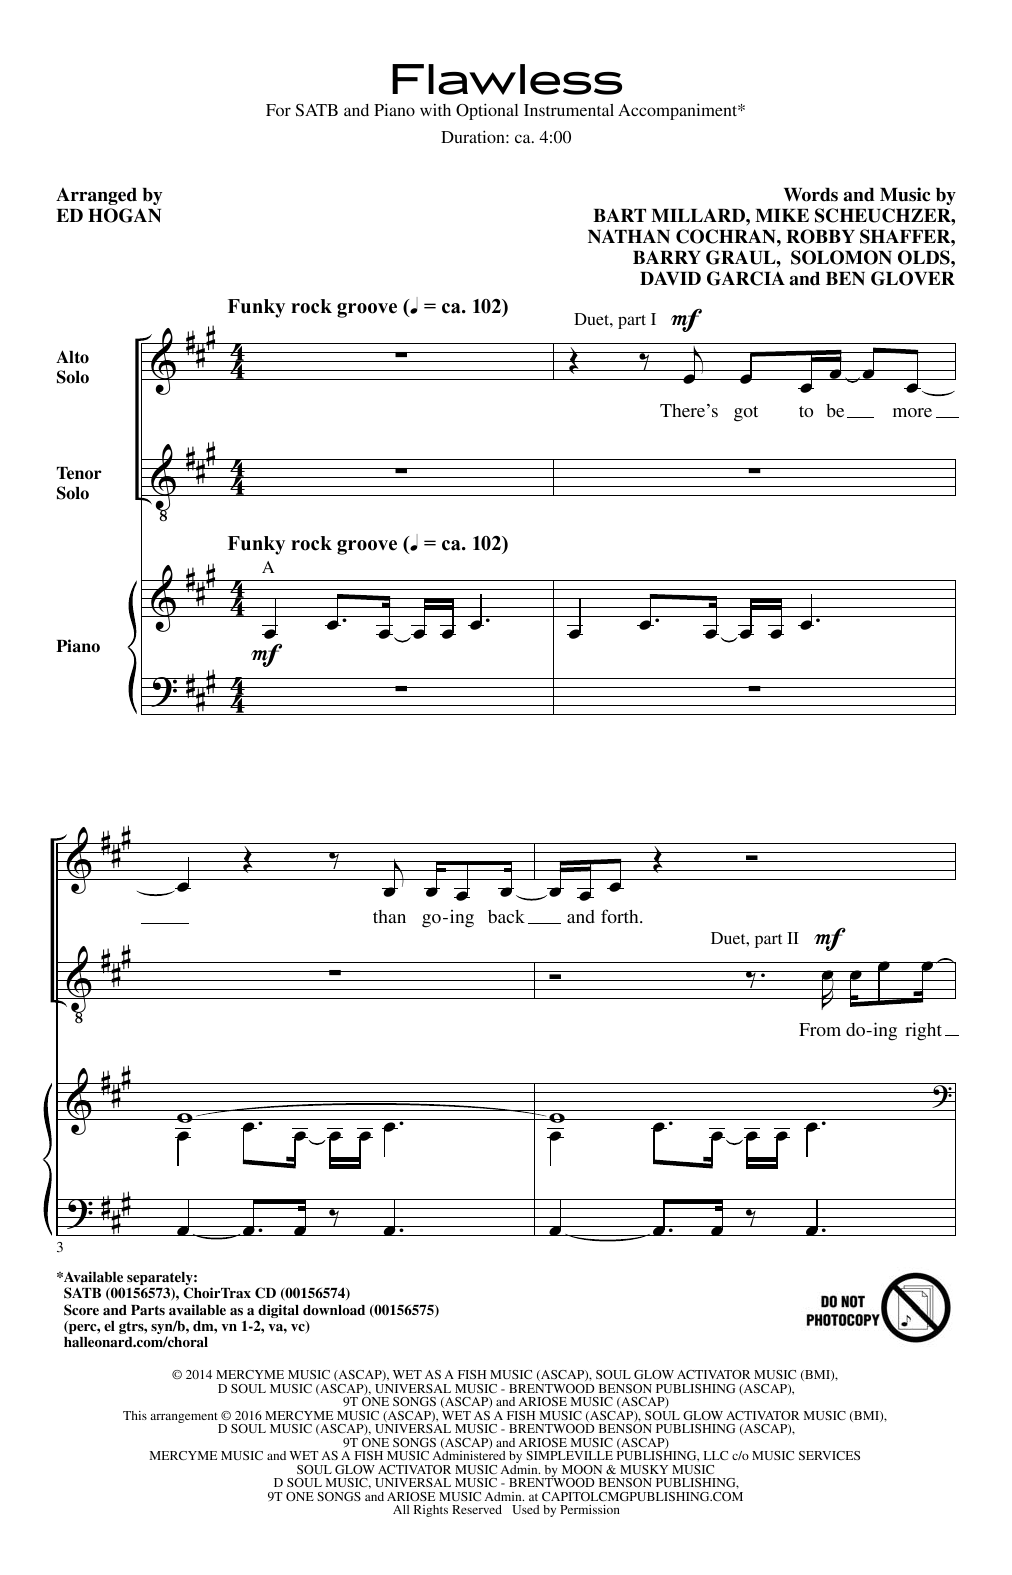 Ed Hogan Flawless Sheet Music Notes & Chords for SATB - Download or Print PDF